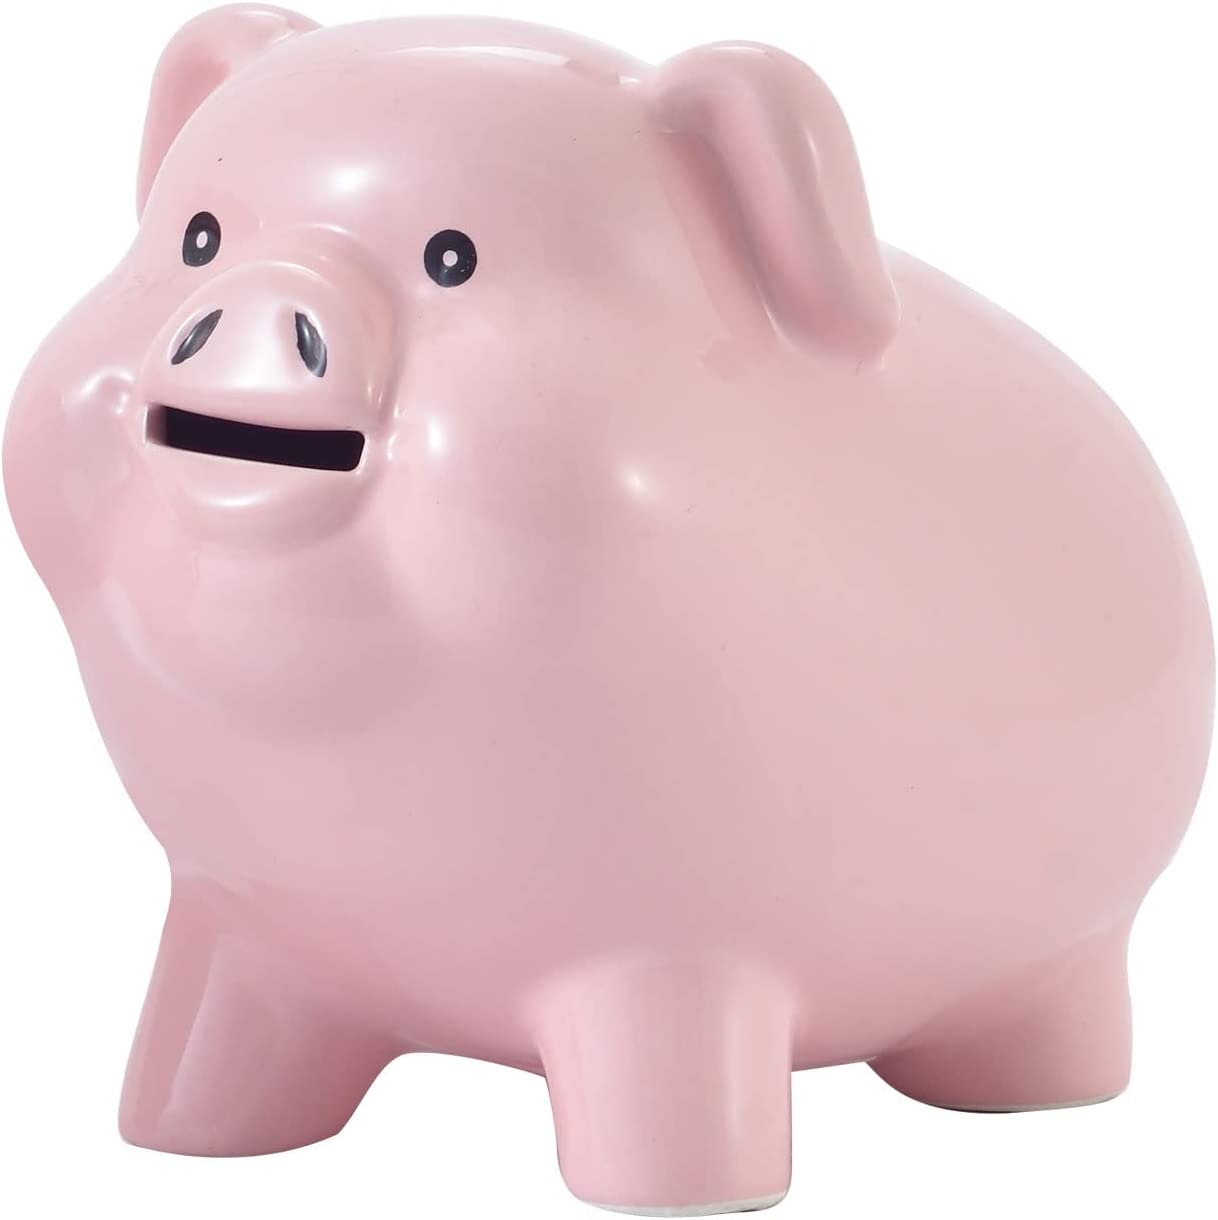 PIG WORLD Piggy Bank for Adults Must Break to Open,Ceramic,Girls Piggy Bank for 